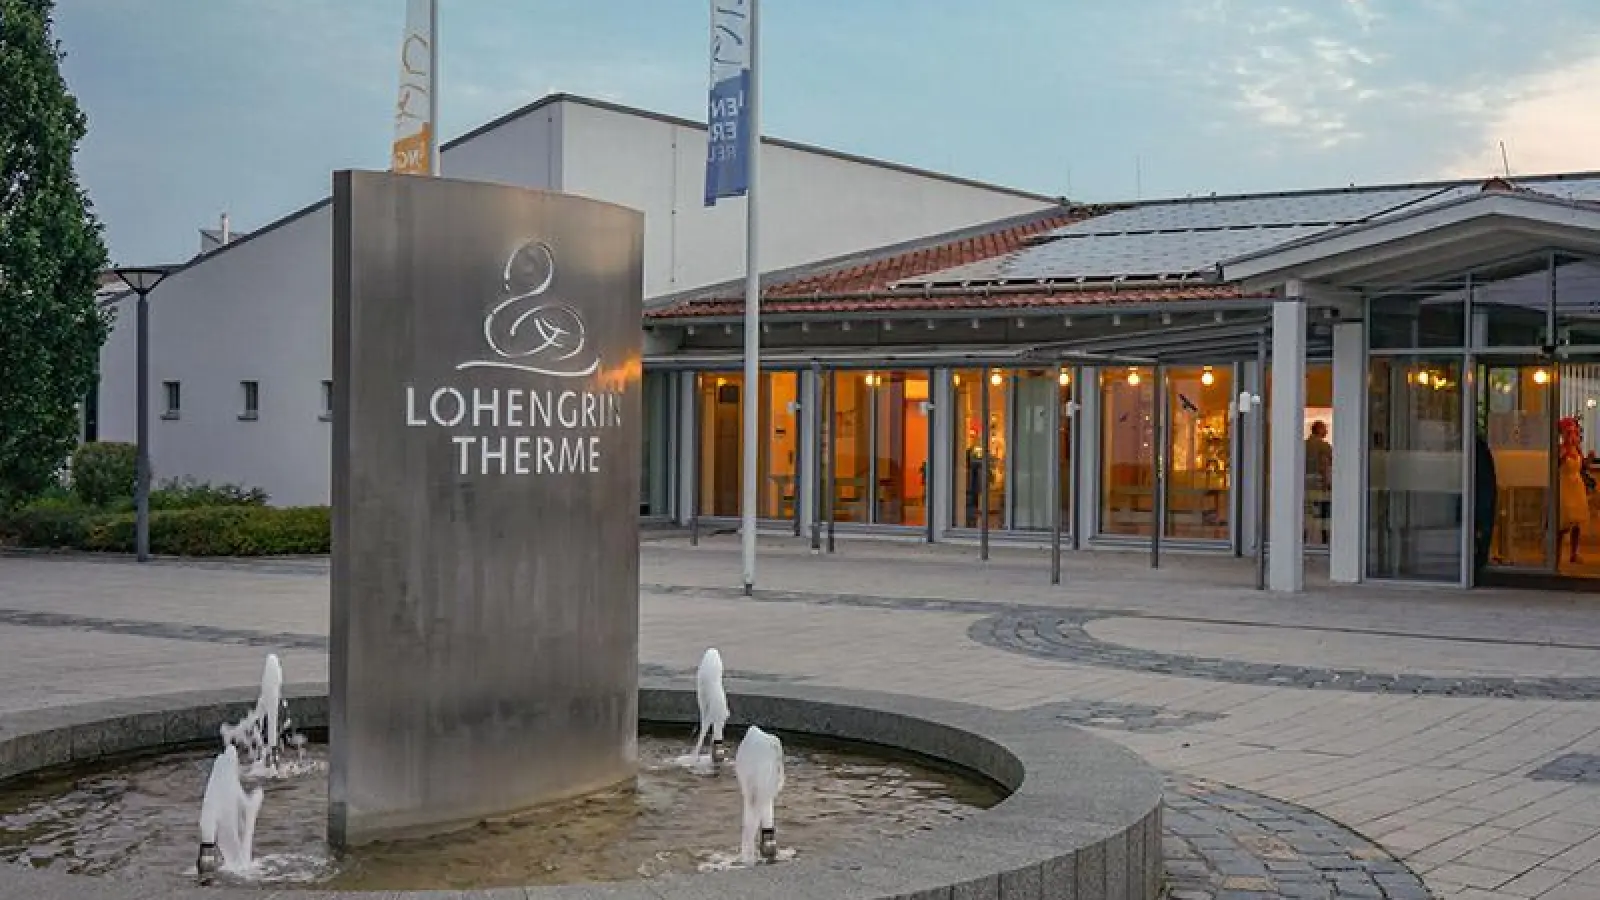 Lokalnachrichten: Baufehler in der Lohengrin Therme (Foto: Stefan Dörfler)